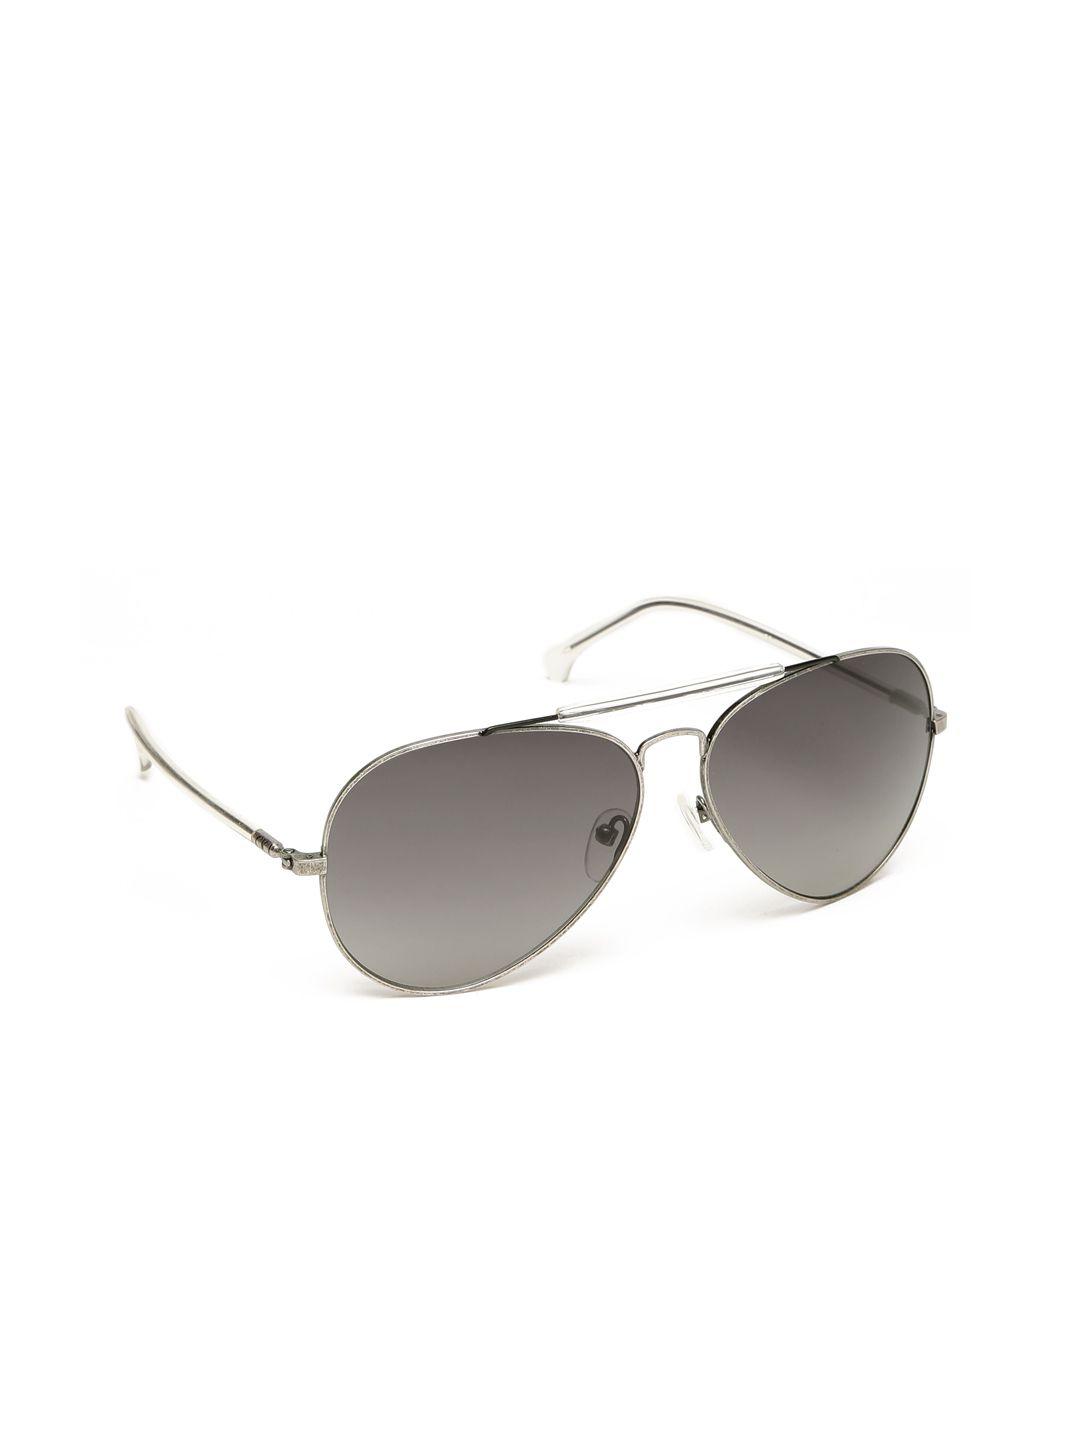 calvin klein jeans women aviator sunglasses 419 004 61